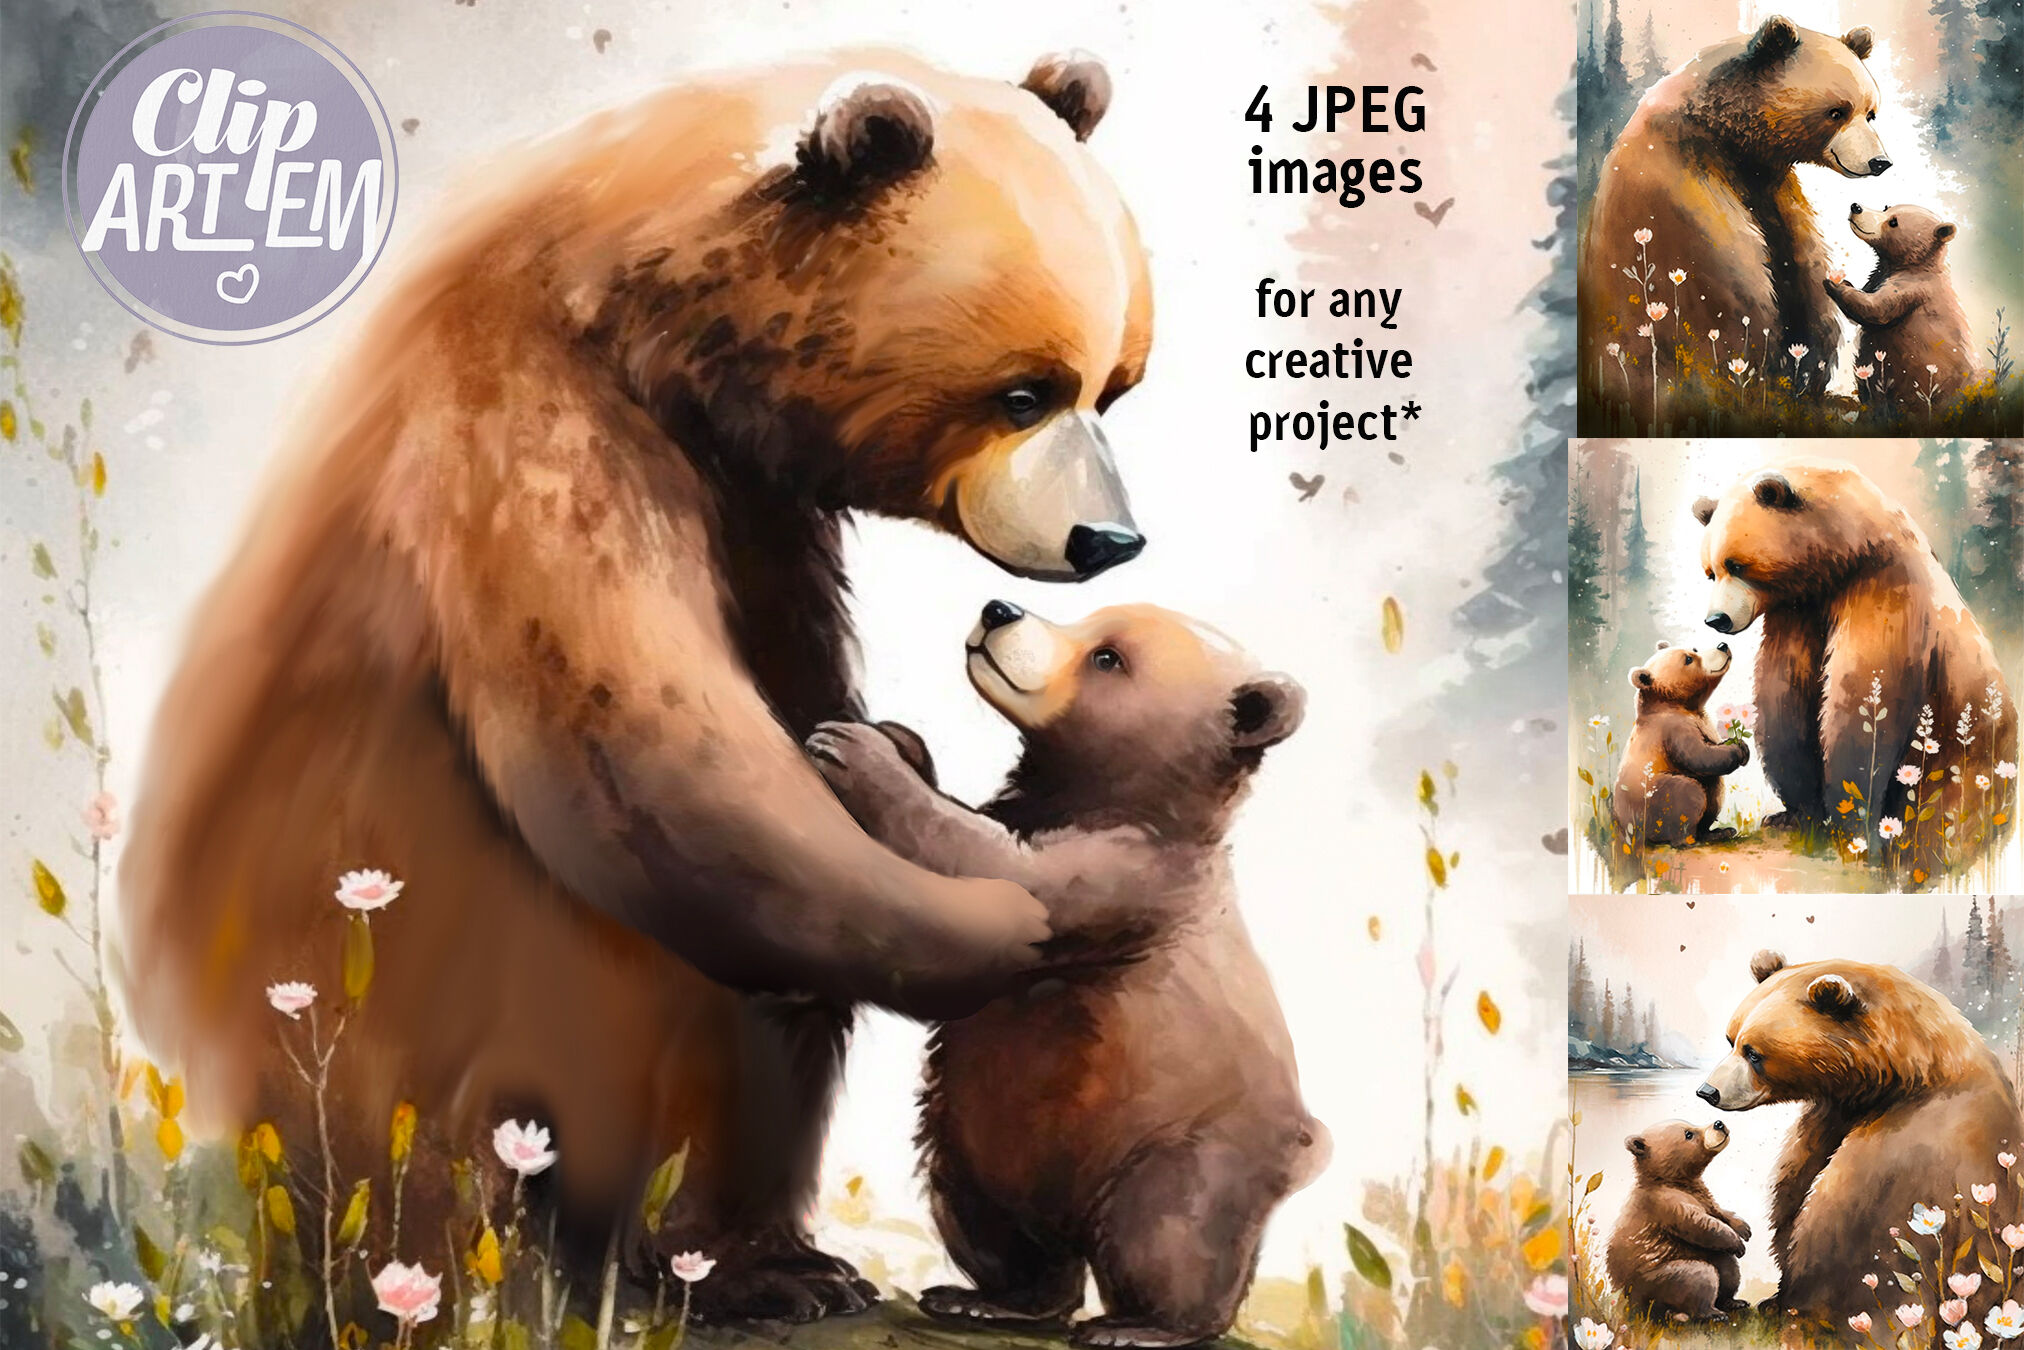 https://media1.thehungryjpeg.com/thumbs2/ori_4254535_y10f2dlrof3rpryfgr0qcpg4torelr765q5eohh2_mother-bear-baby-cub-painting-artwork-4jpeg-images-set-wall-art-decor.jpg